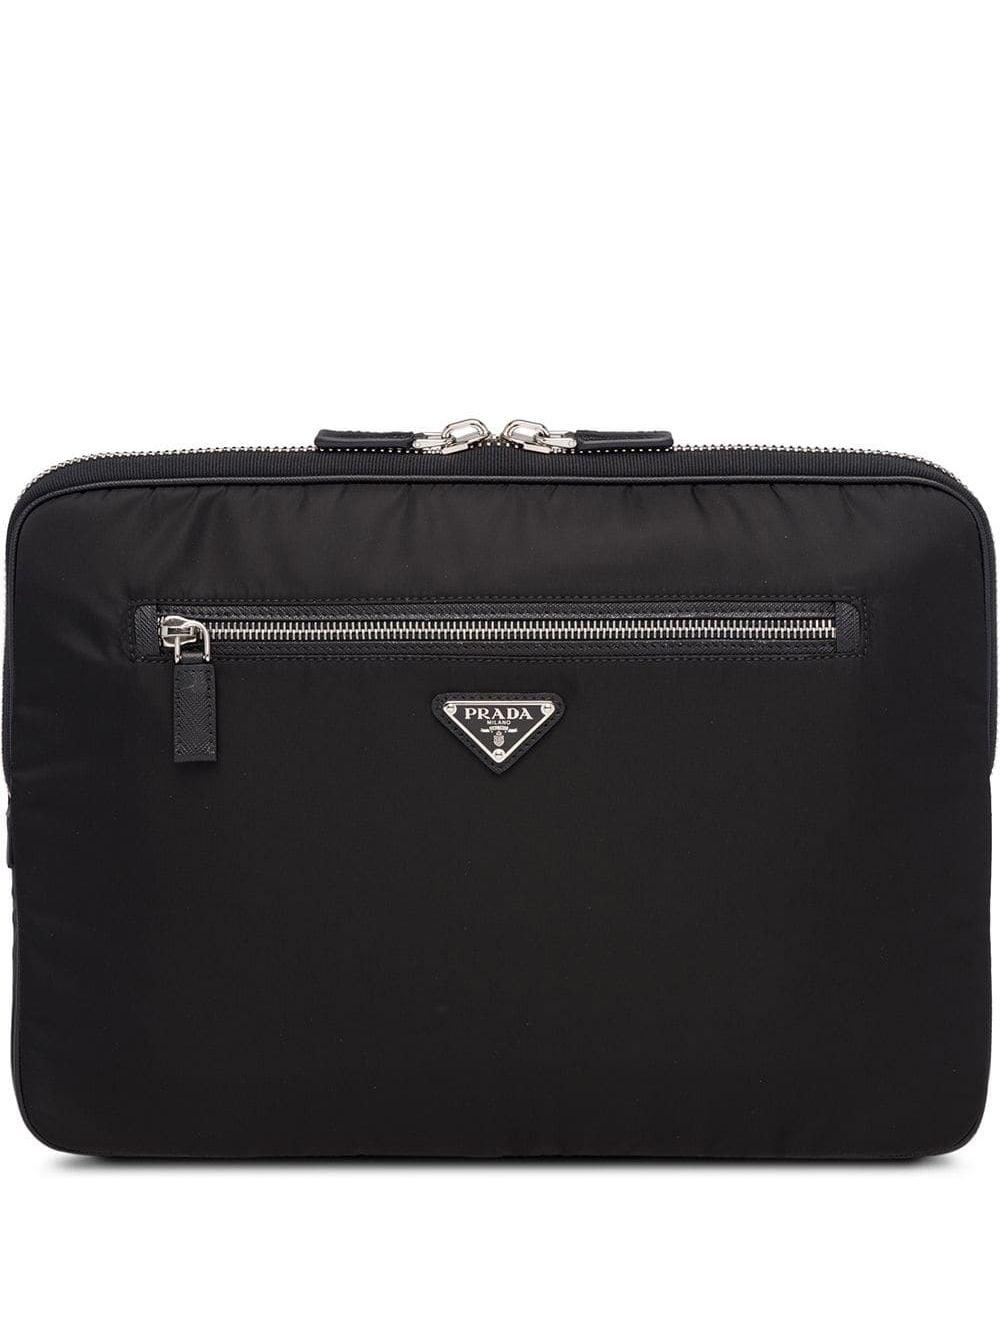 Prada Saffiano Laptop Case in Black for Men | Lyst